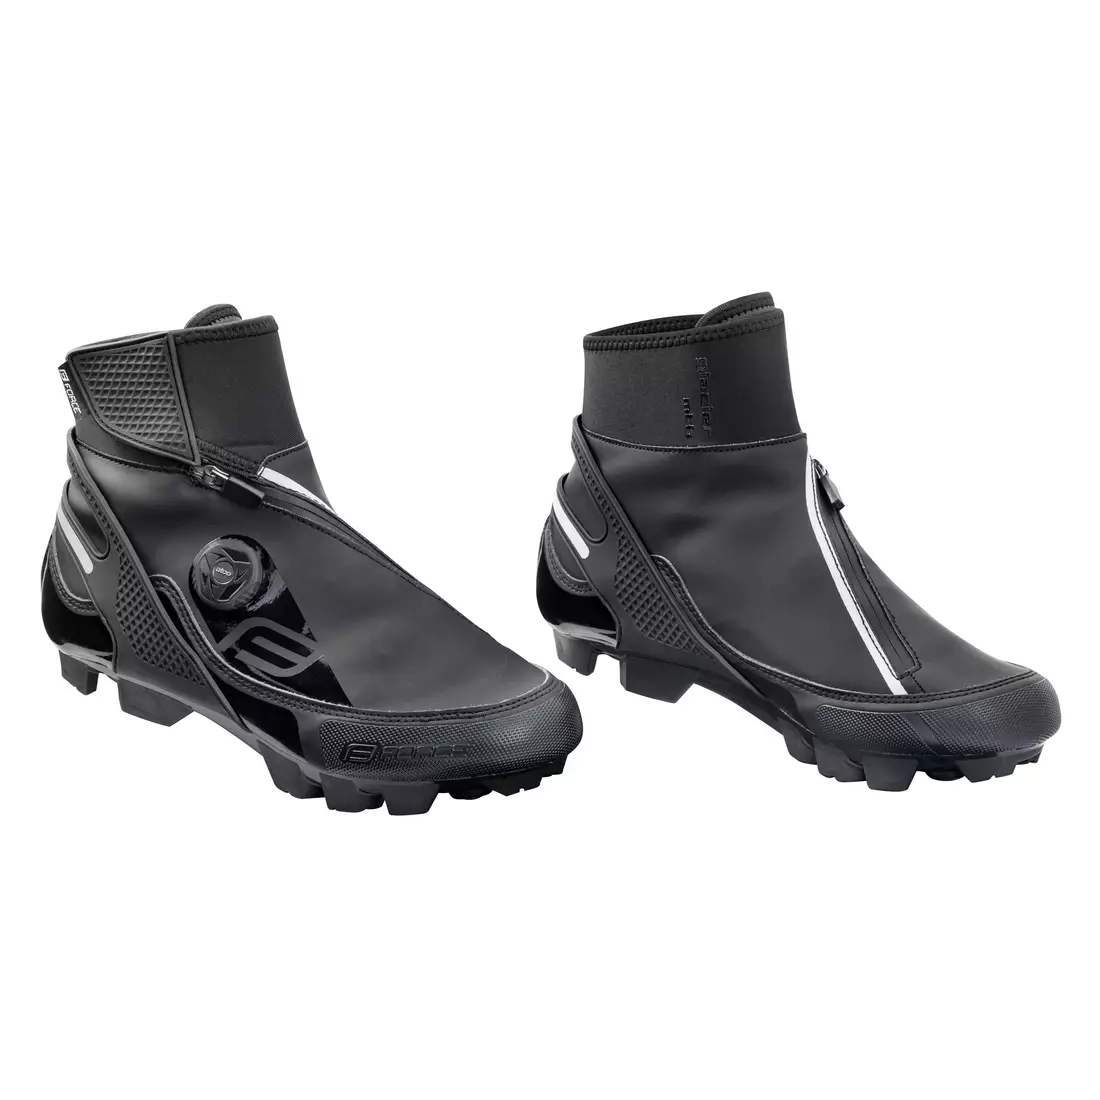 FORCE Cycling shoes, winter MTB GLACIER, black 9404536